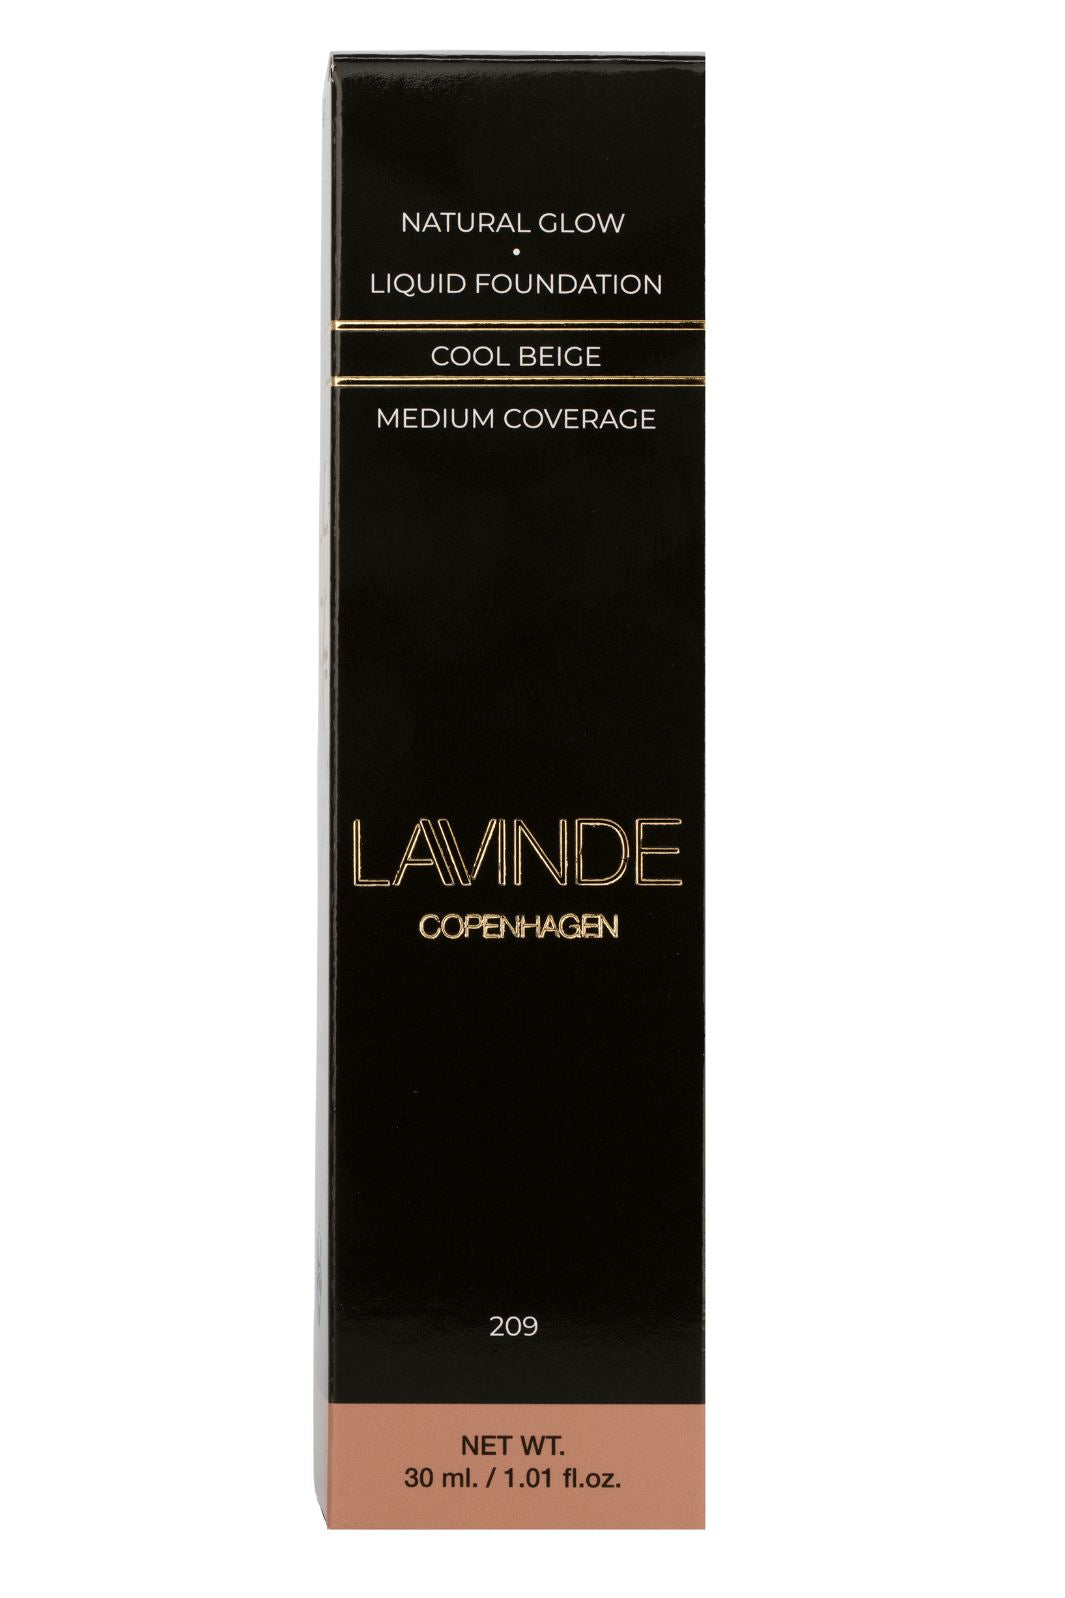 Lavinde Copenhagen - Natural Glow Liquid Foundation Cool Beige 209 - 30 ml Makeup 